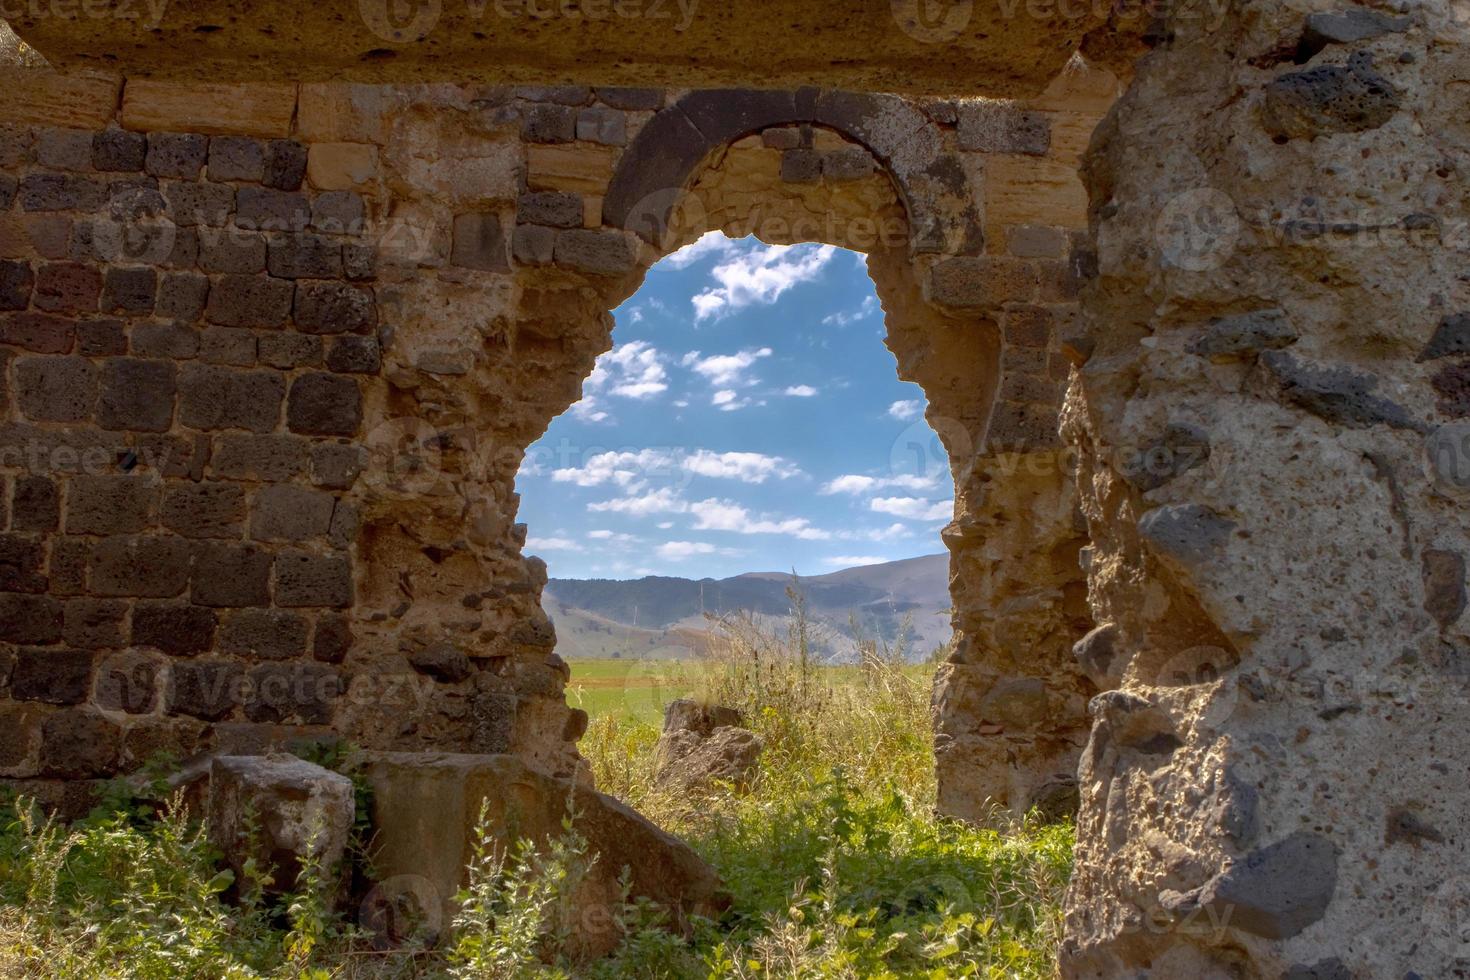 église jgrashen, st. Église jgrashen, vardablur, stepanavan, arménie, région de lori photo